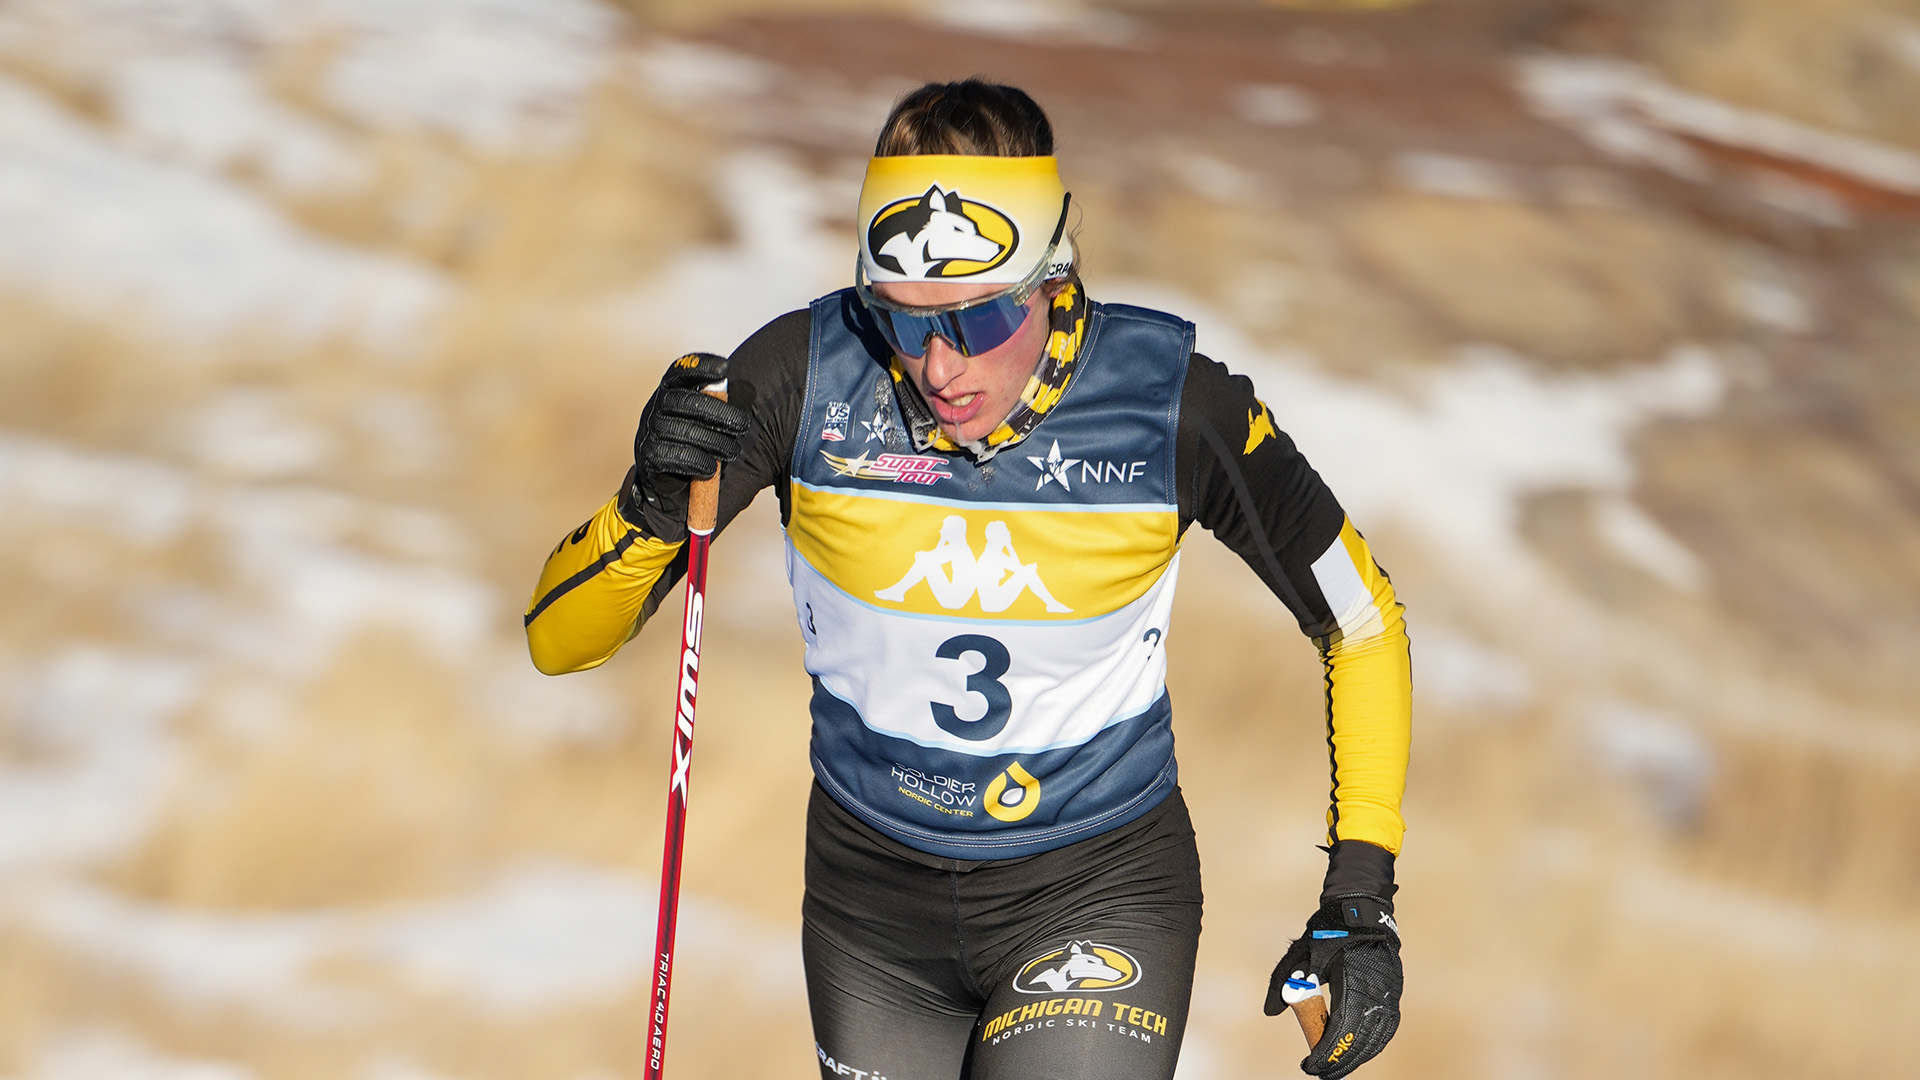 Tech Nordic Skiing | Anabel Needham U23 World Championships Video Preview